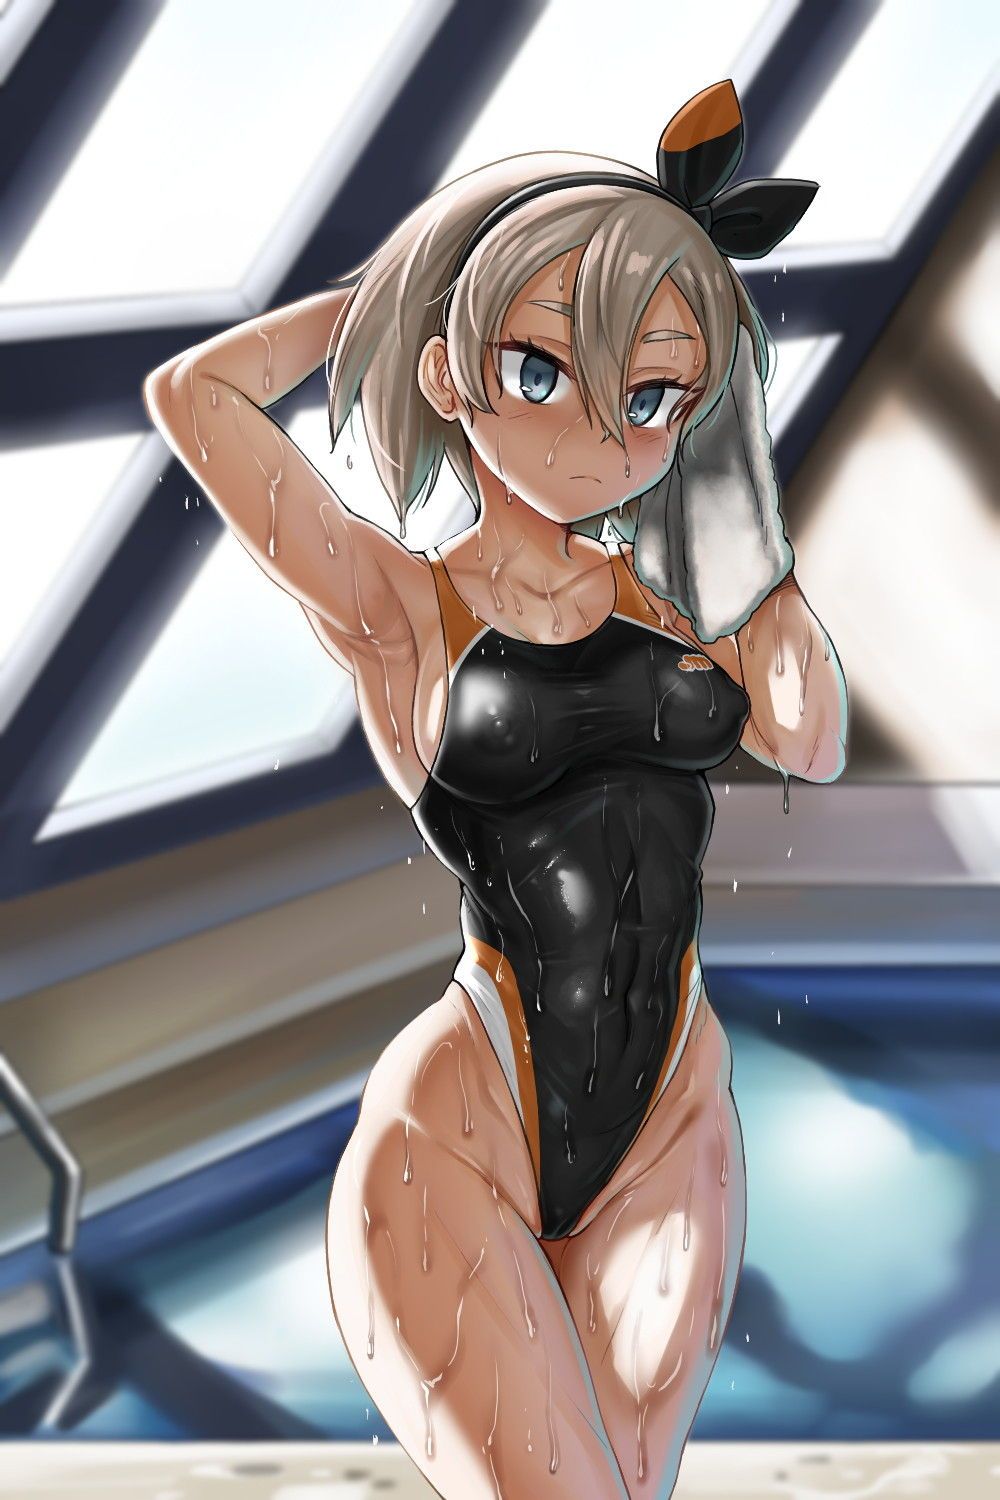 Swimming suit is erotic, isn't it? 1